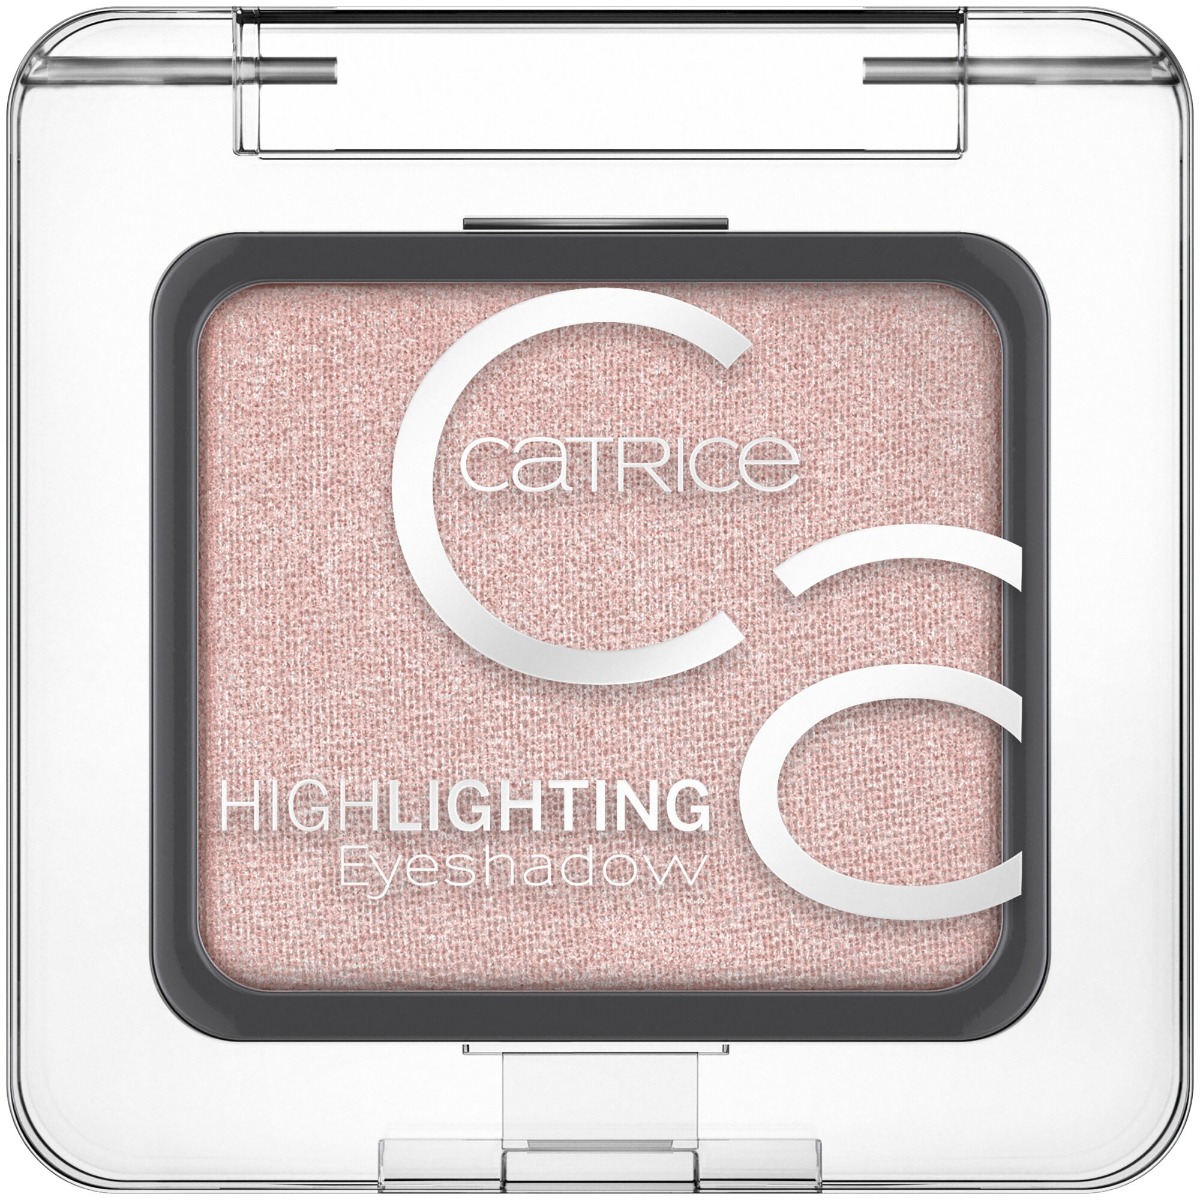 Fard de pleoape Highlighting 030 - Metallic Lights, 2g, Catrice